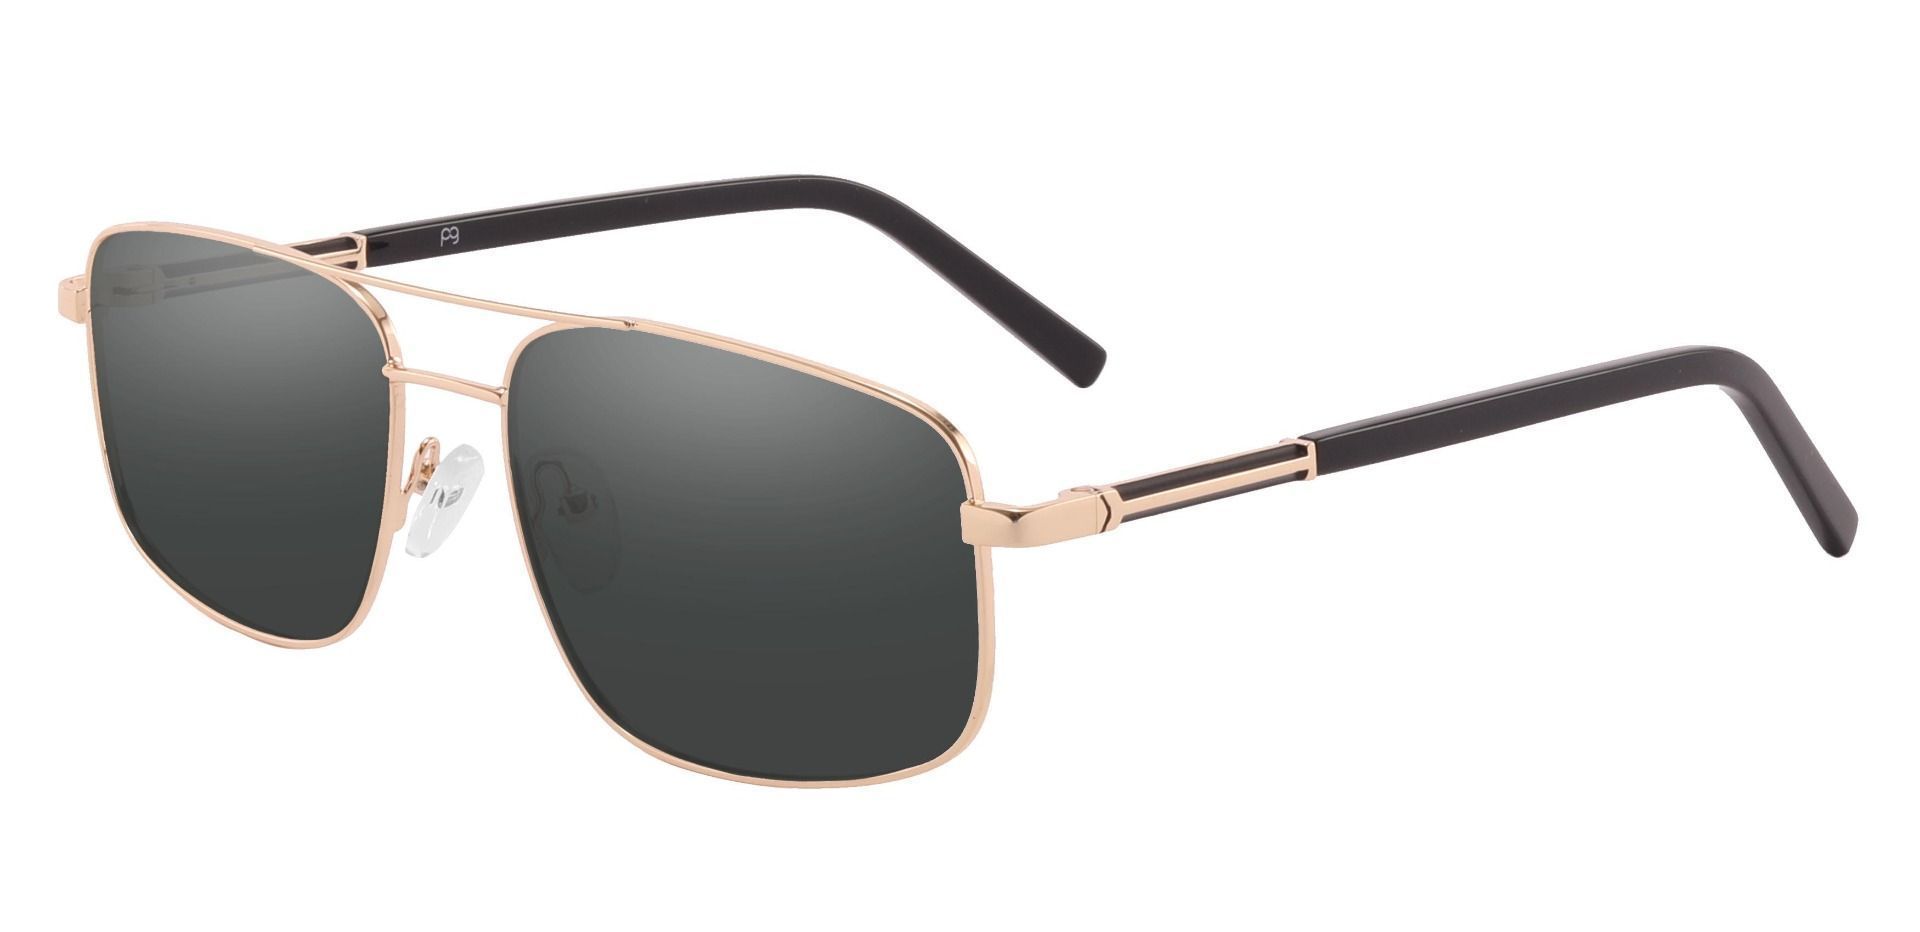 Davenport Aviator Non-Rx Sunglasses - Gold Frame With Gray Lenses